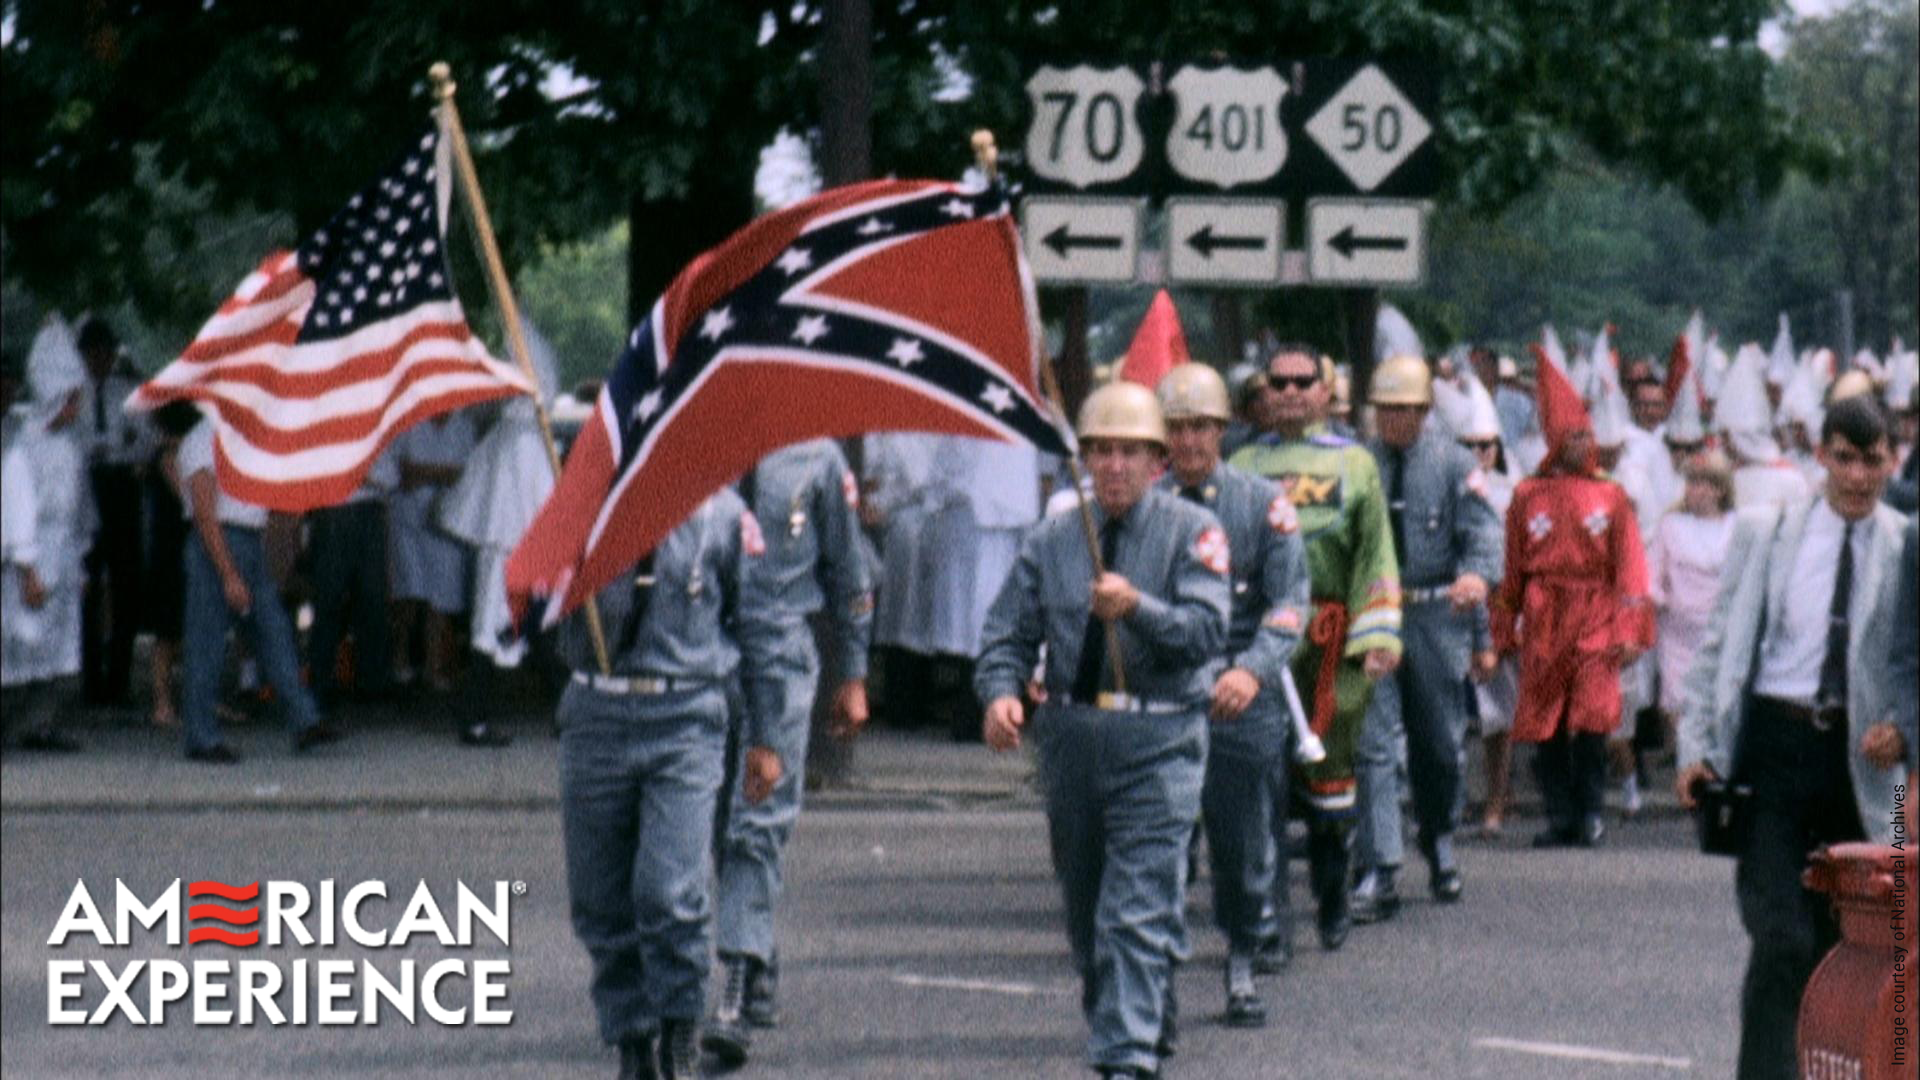 The Ku Klux Klan in 1960s North Carolina | Klansville U.S.A.